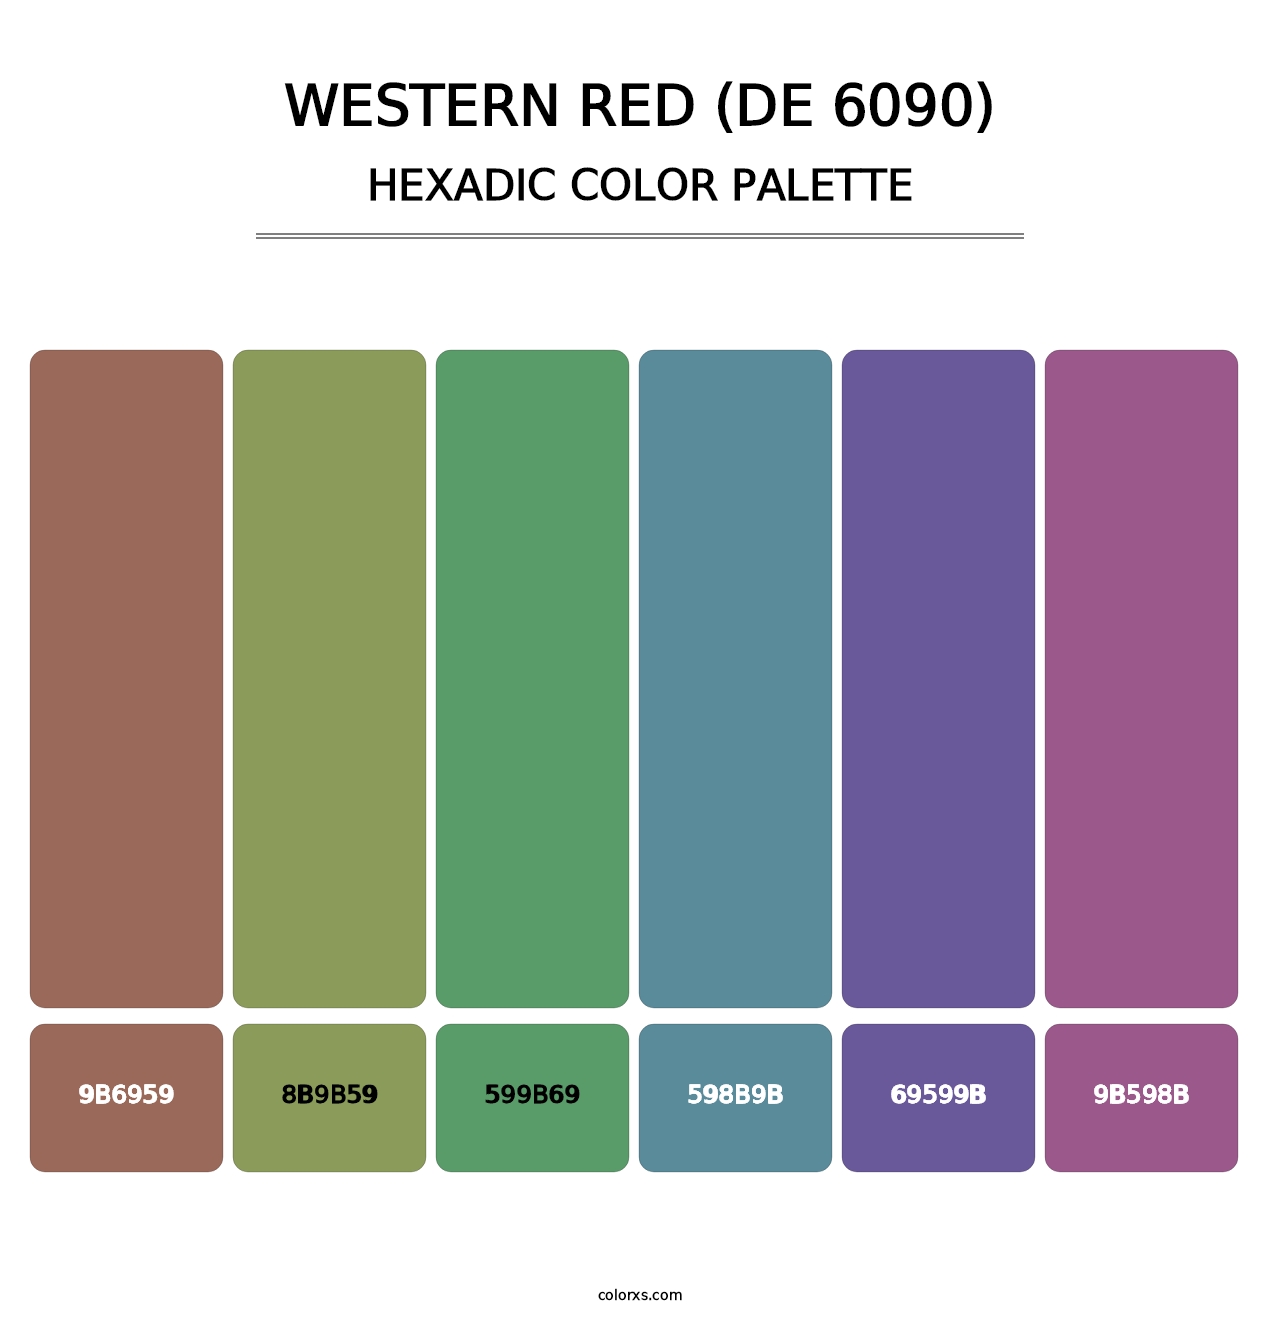 Western Red (DE 6090) - Hexadic Color Palette